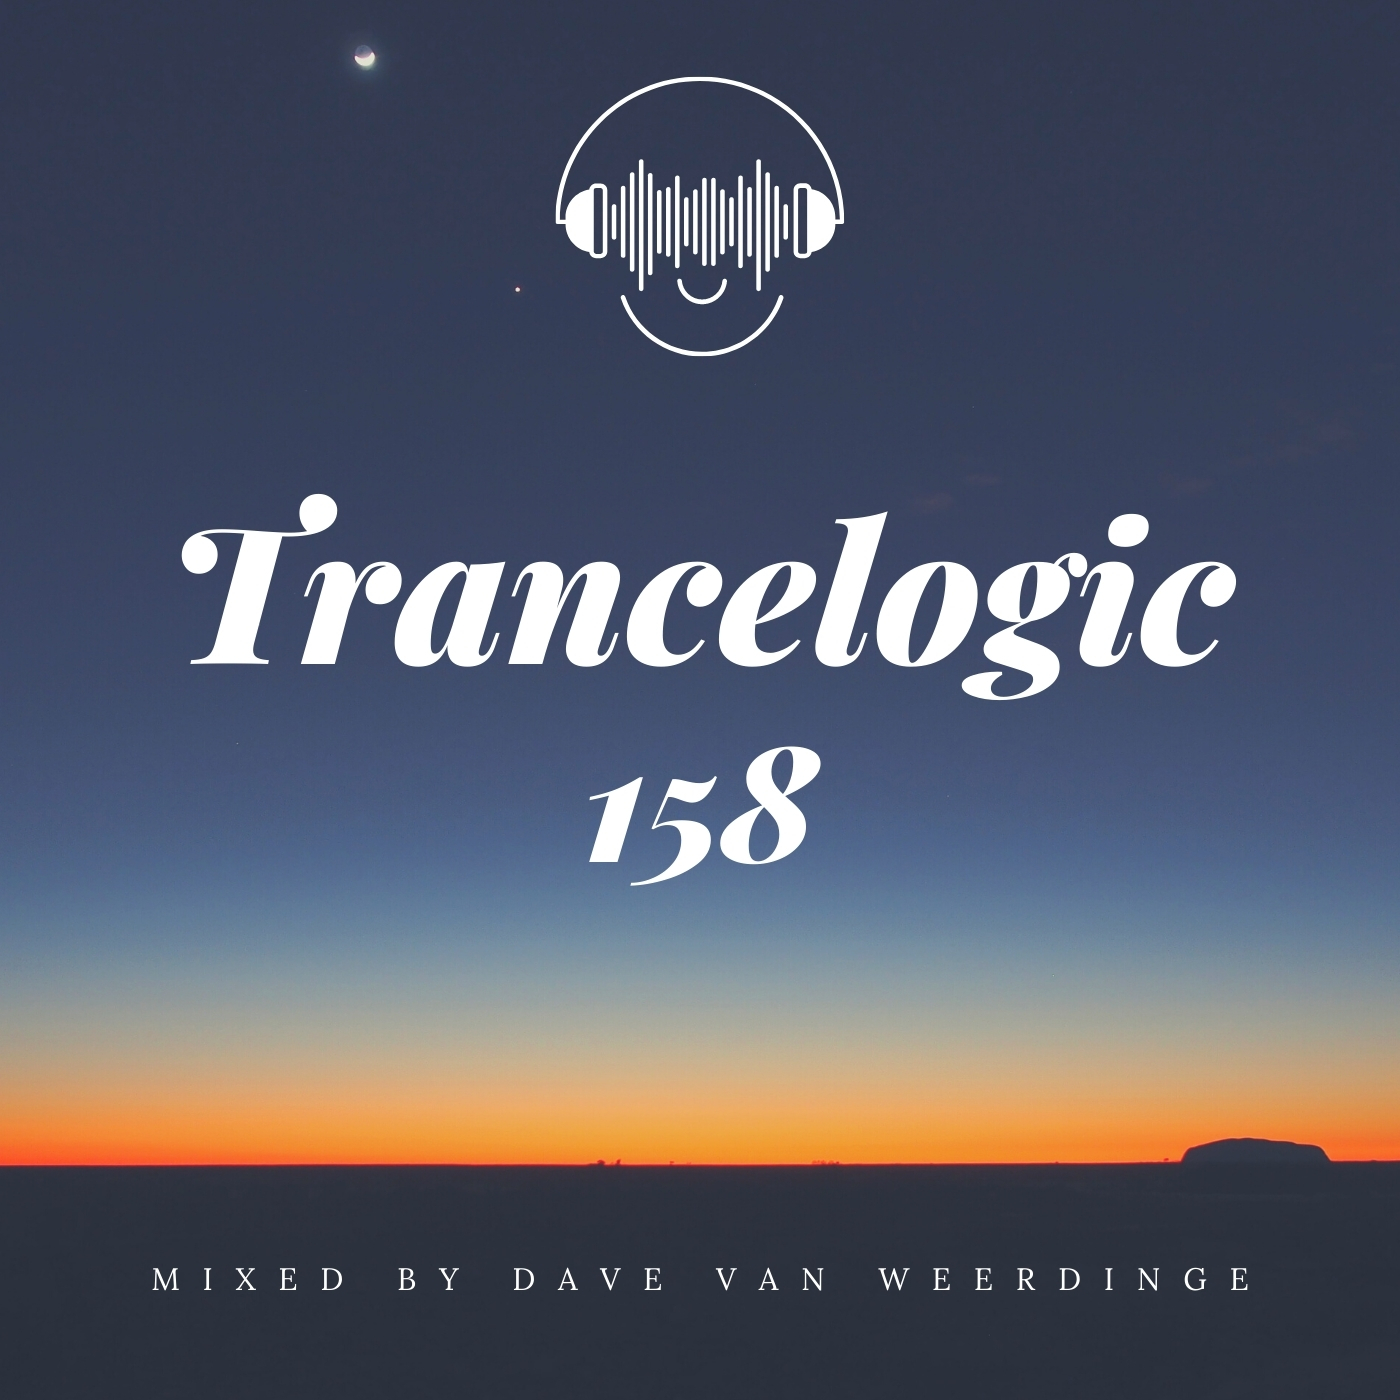 Trancelogic 158 by Dave van Weerdinge